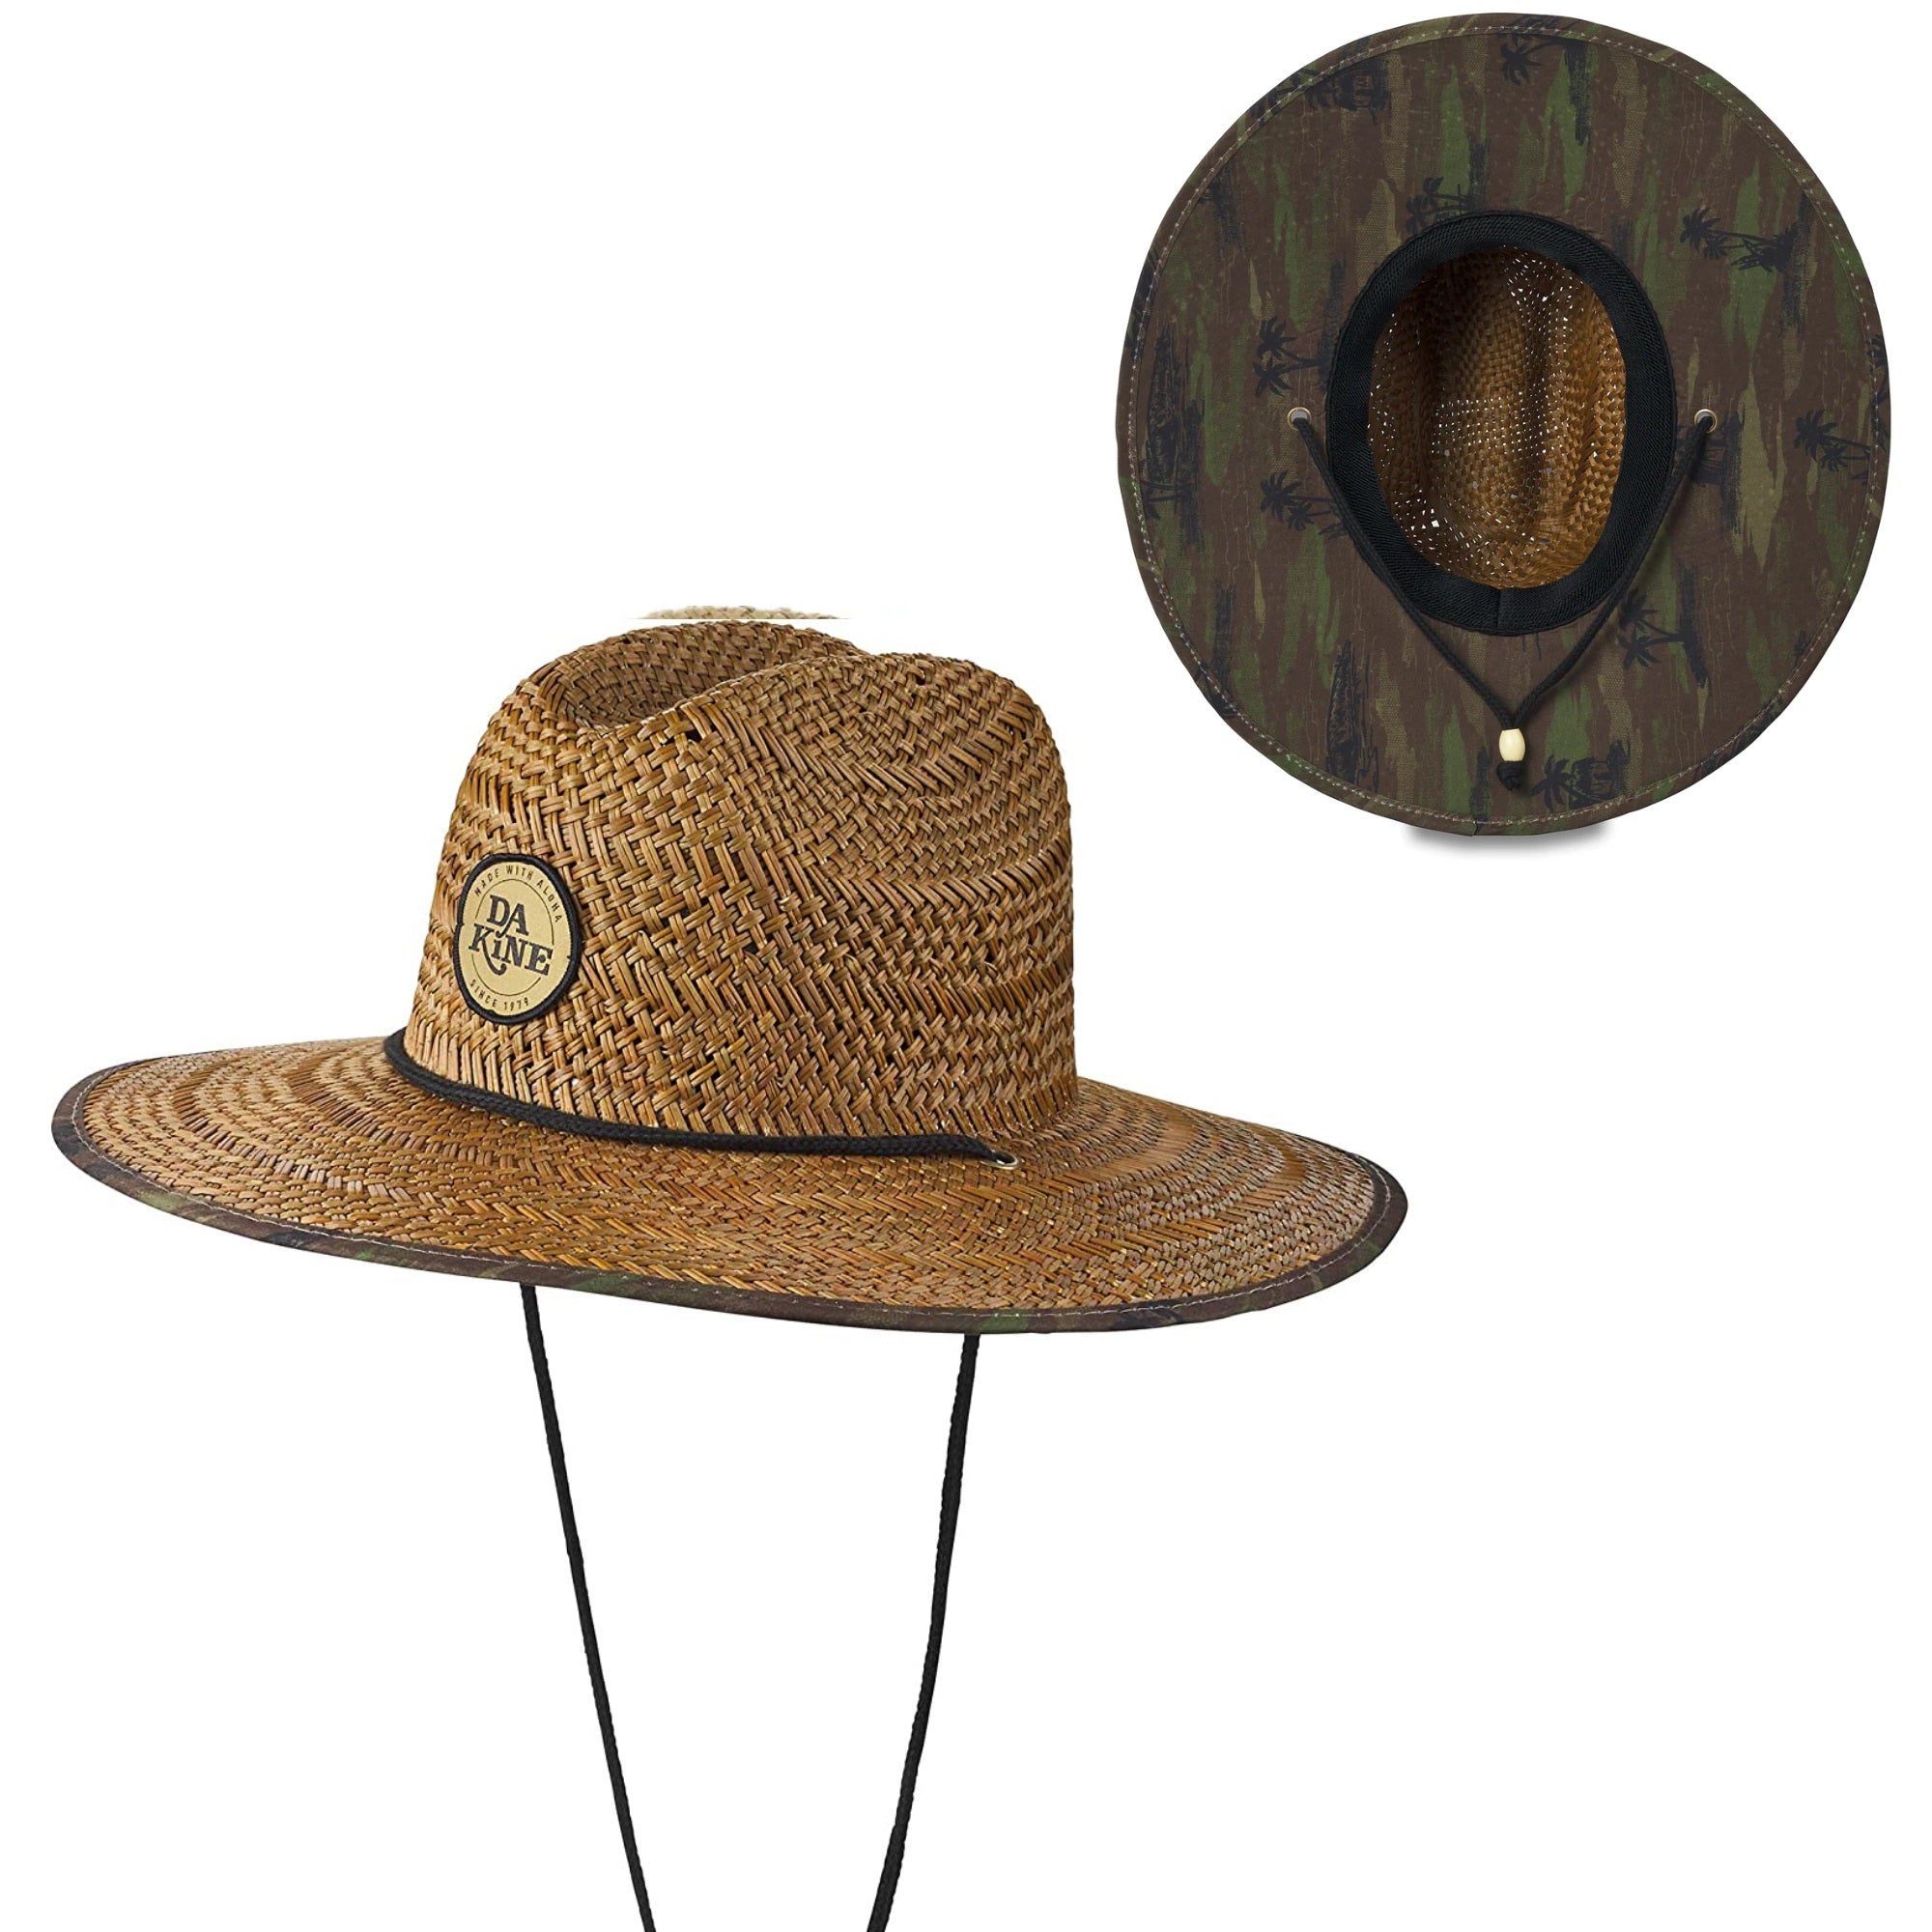 Dakine Pindo Straw Hat - Hawaiian Style Lifeguard Hat